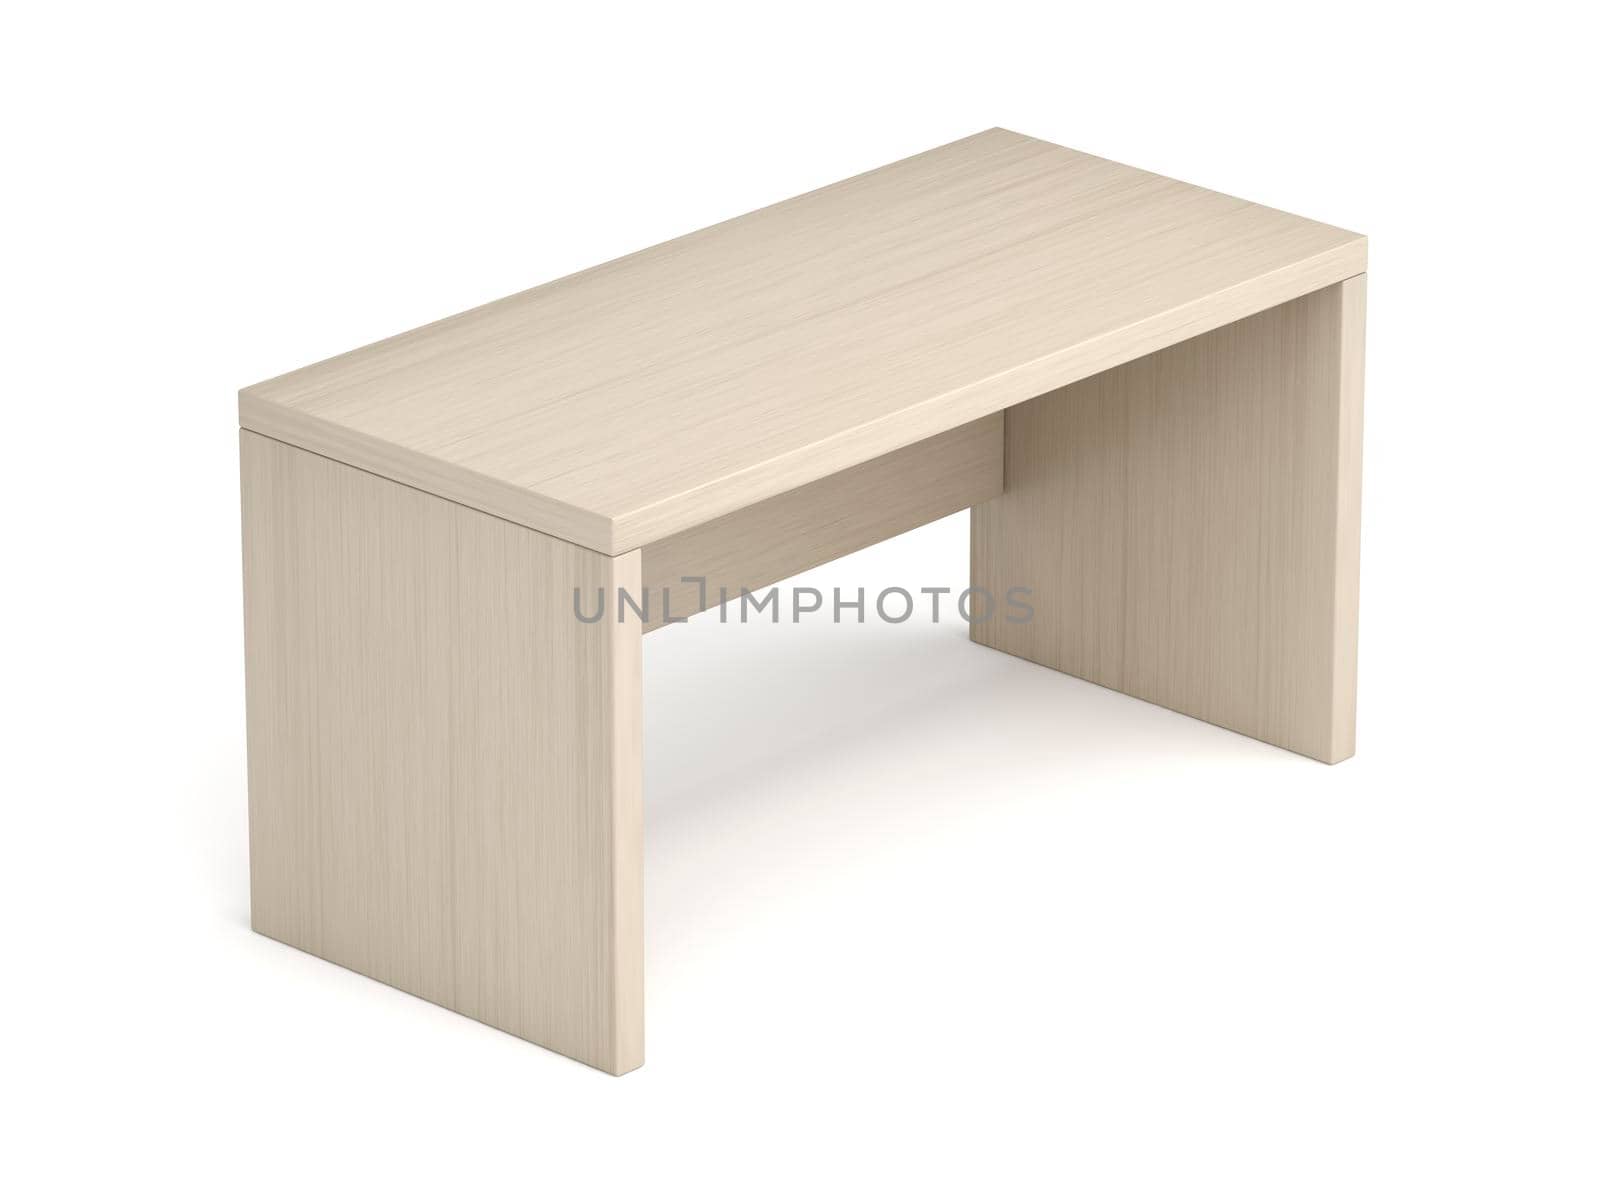 Wooden desk on white background